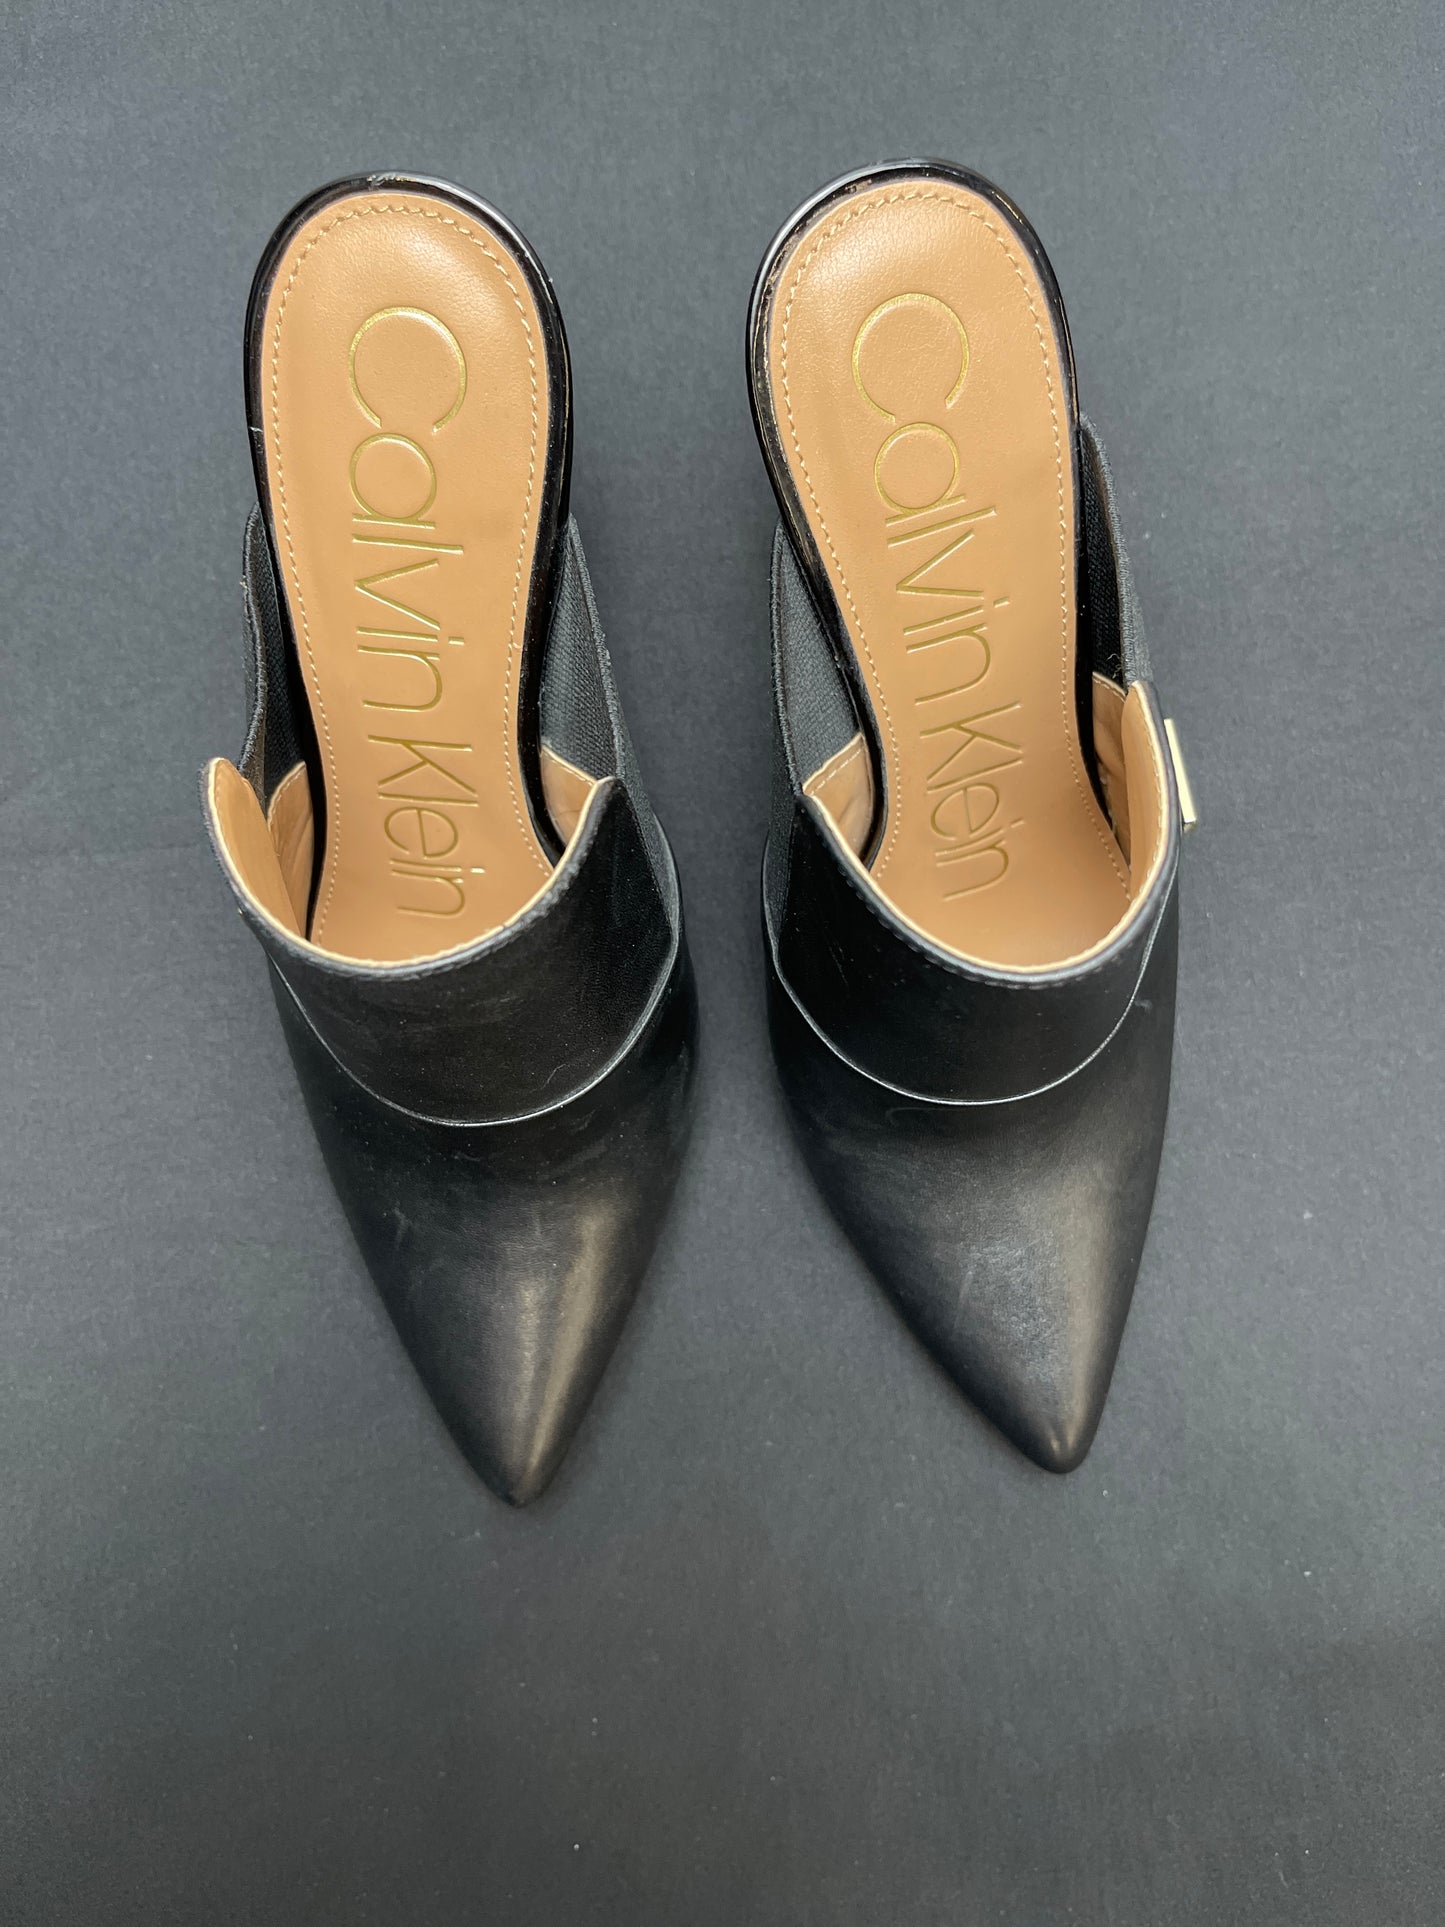 Shoes Heels Stiletto By Calvin Klein  Size: 6.5